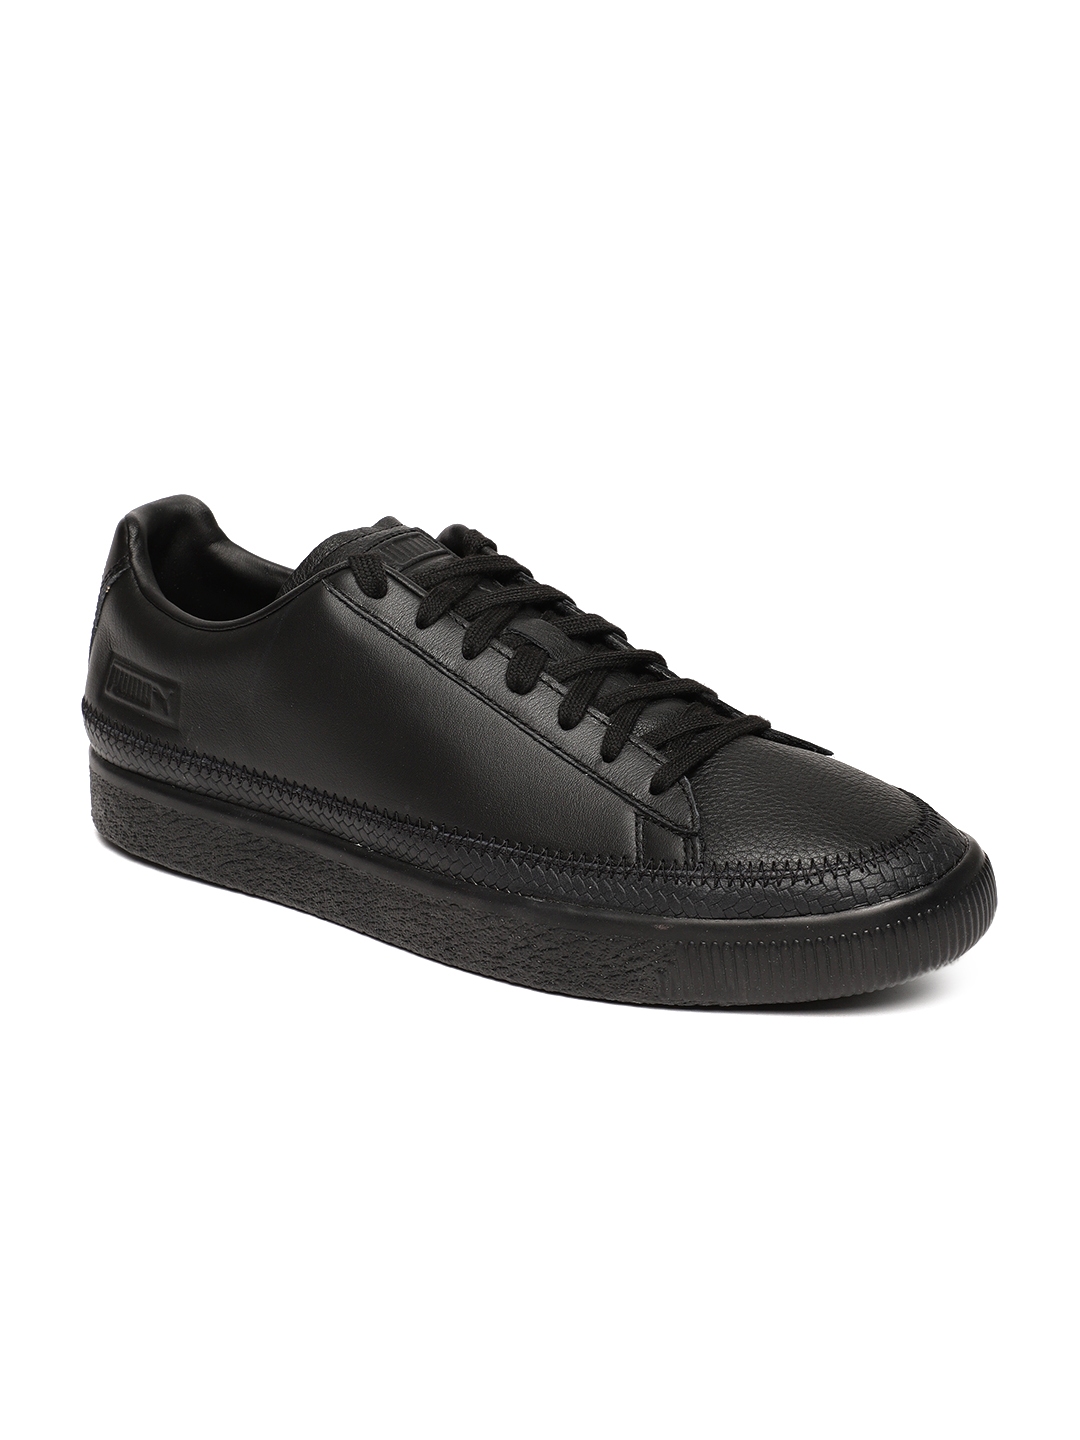 puma leather black shoes